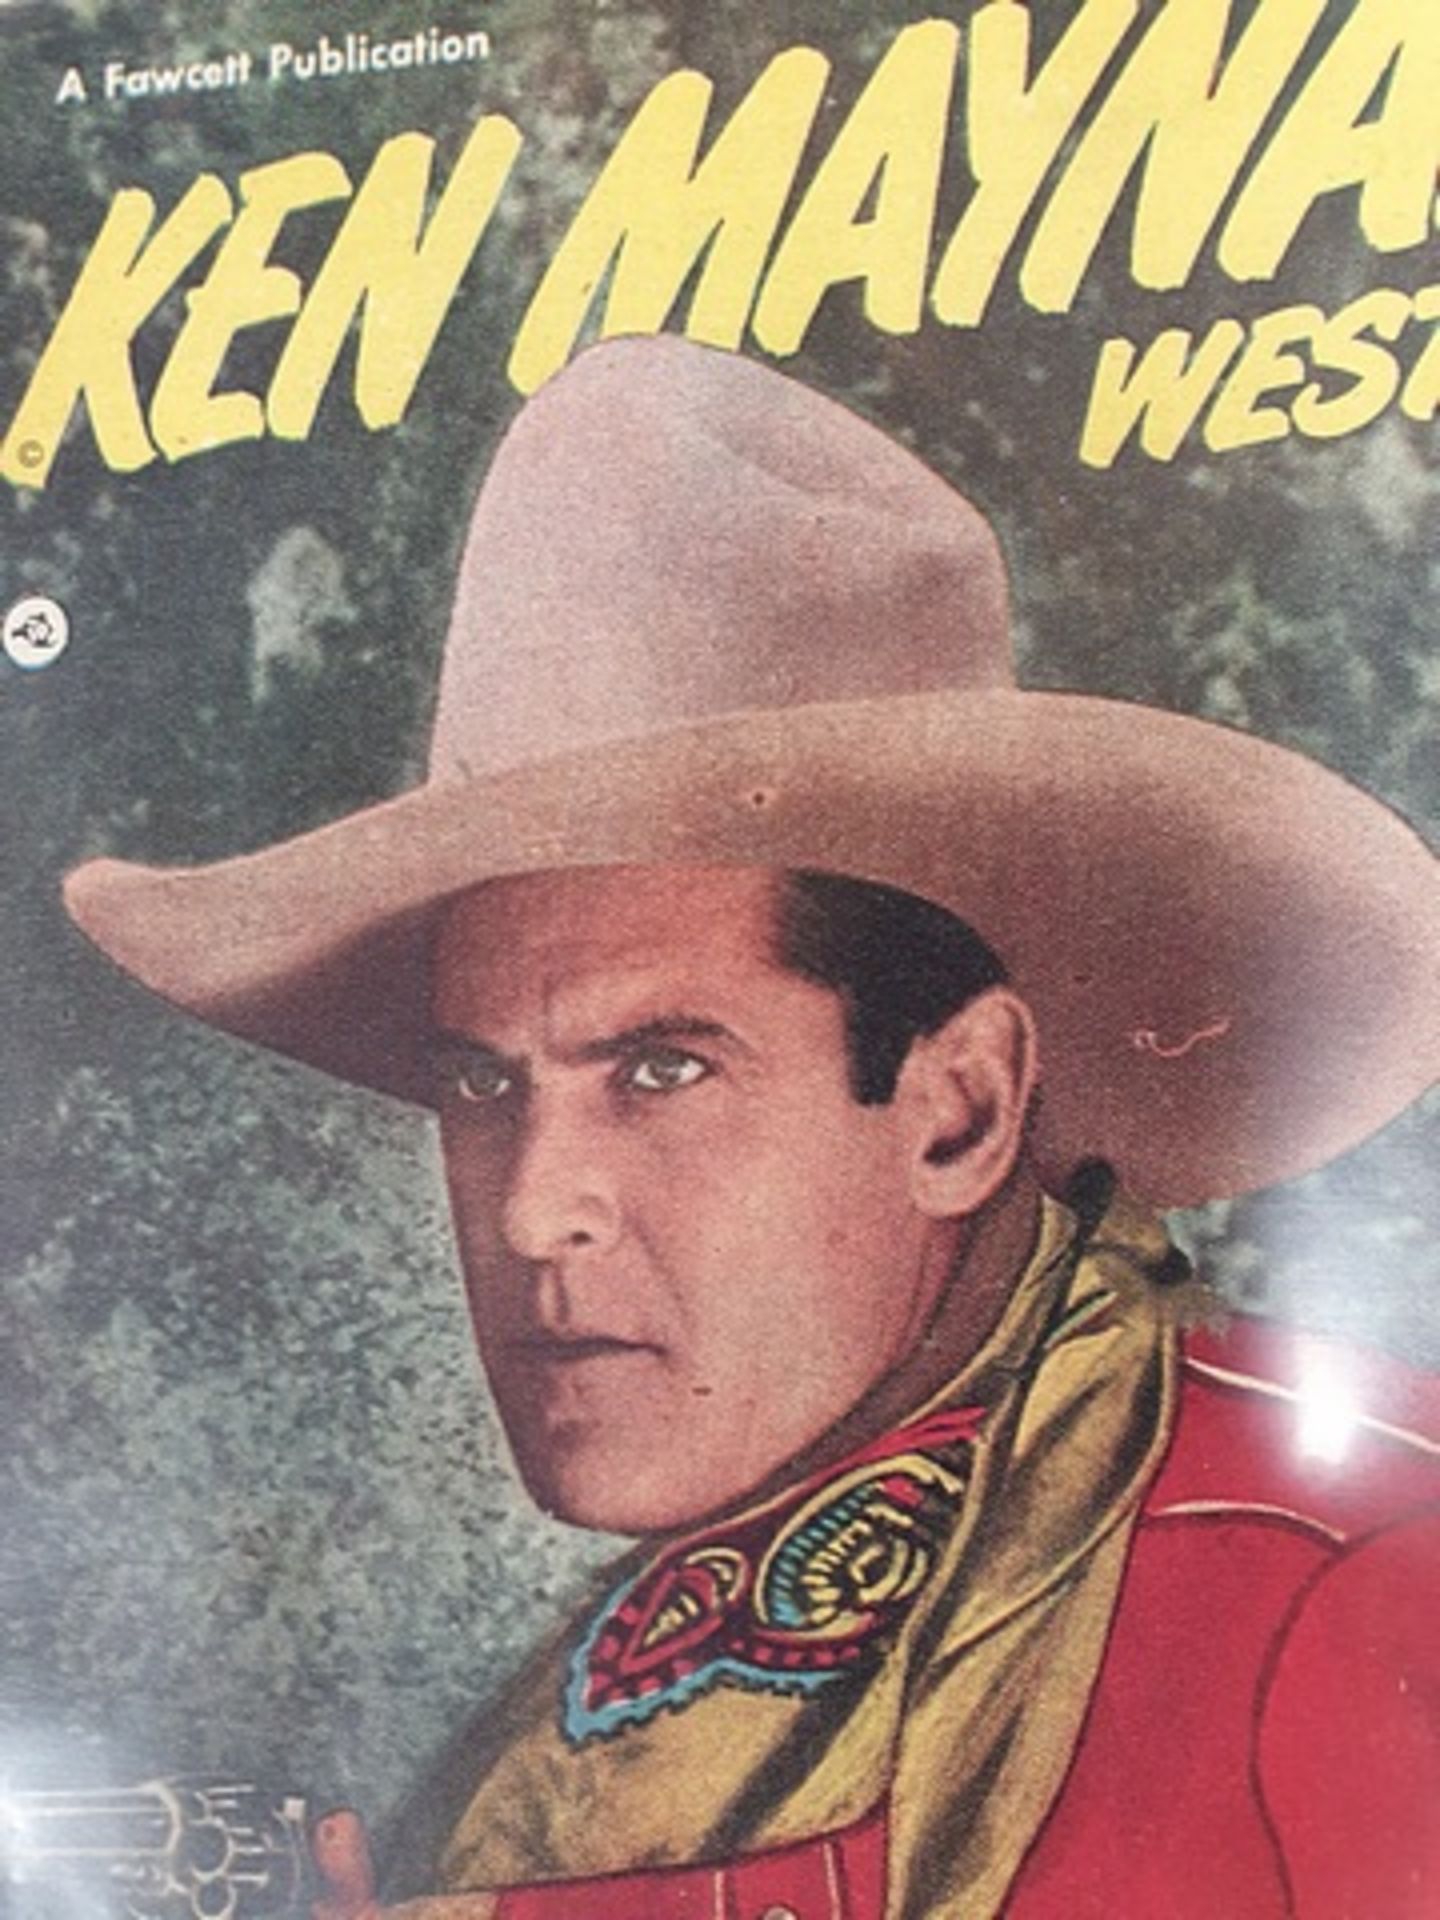 3 x Ken Maynard Western Series Comics Comprising of Ken Maynard Western #7 L. Miller & Son, 1951 - Image 2 of 2